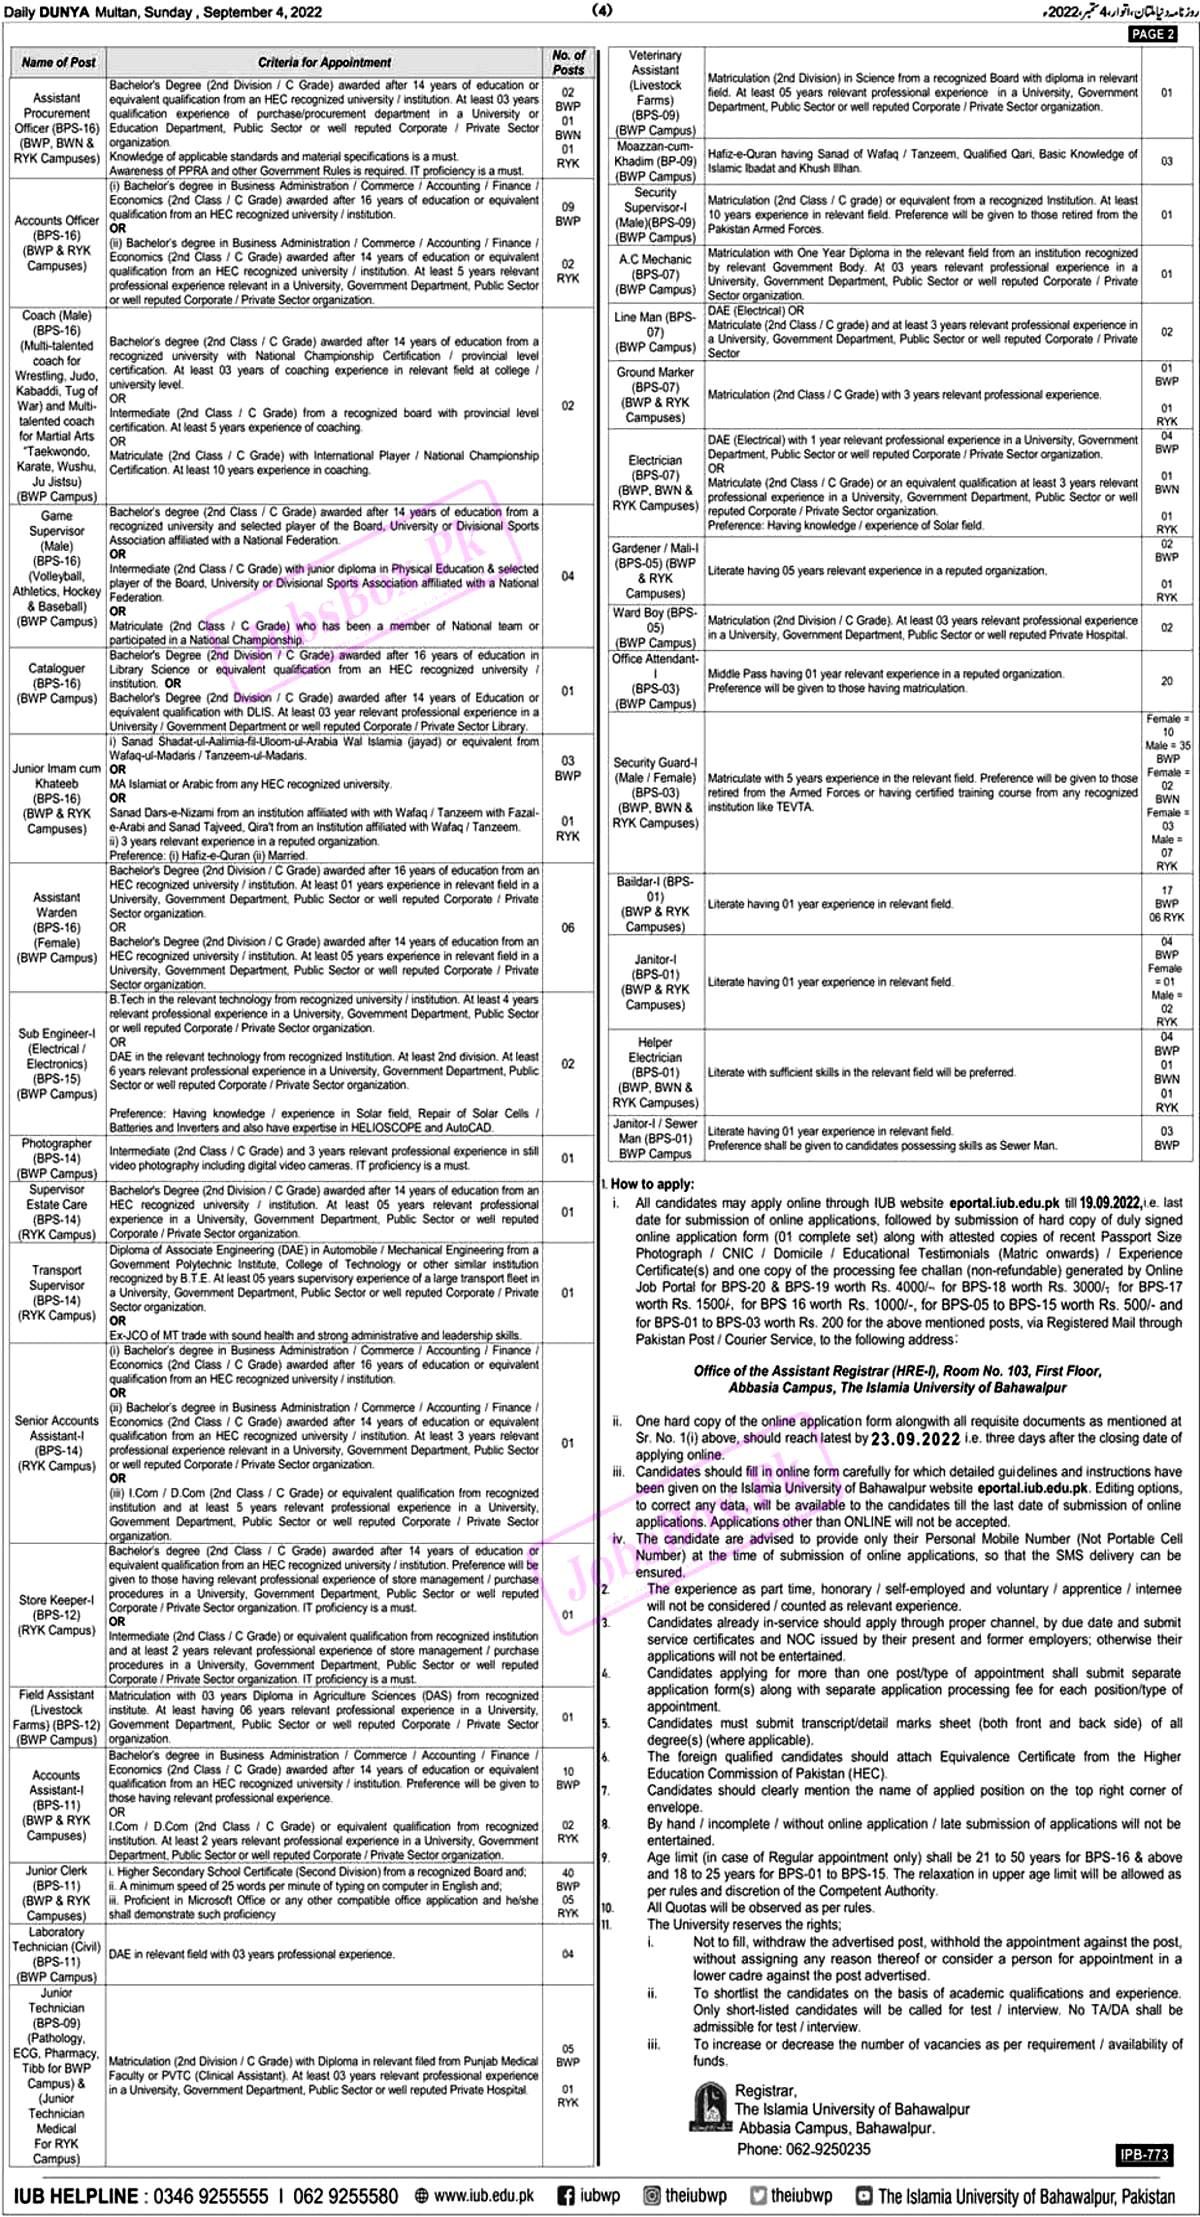 Islamia University of Bahawalpur IUB Jobs October 2022 Recruitment through IUB Job Portal https://eportal.iub.edu.pk